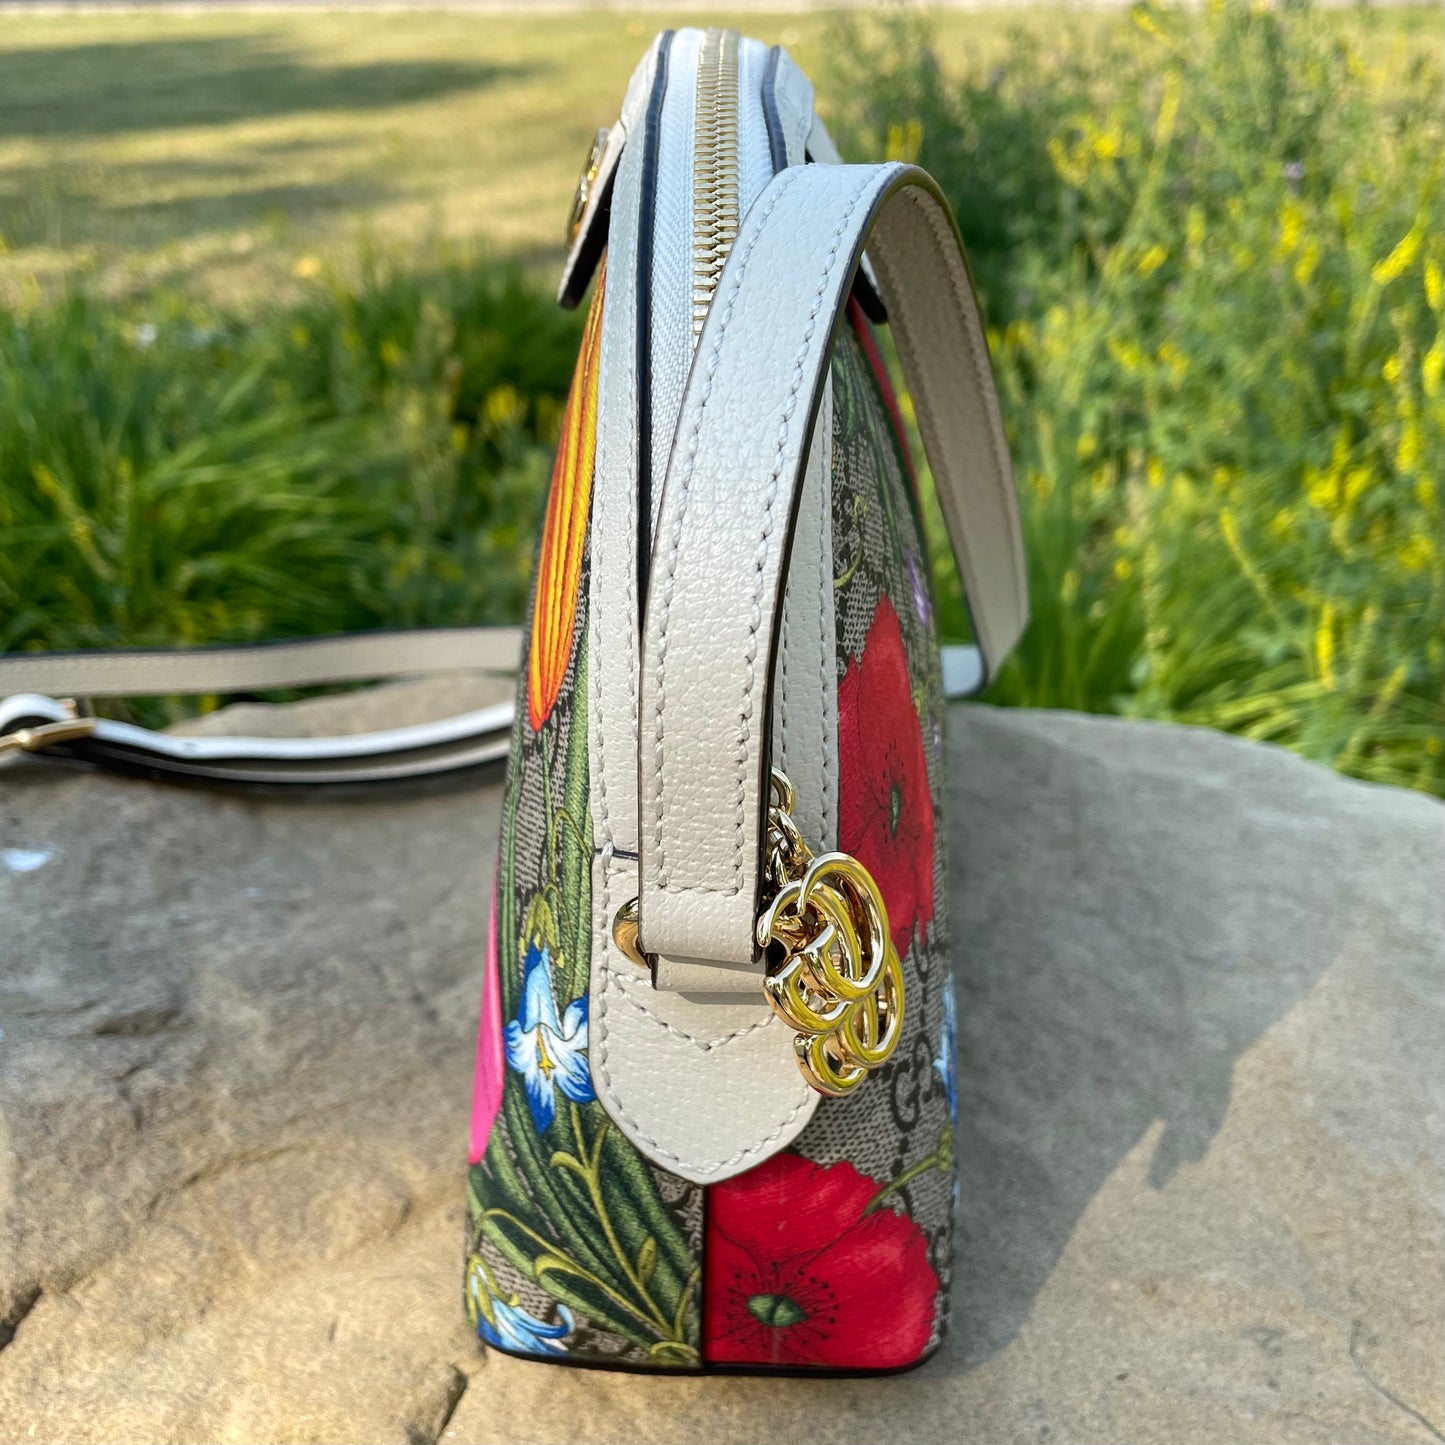 Ophidia GG Shoulder Bag in Multicoloured - Gucci